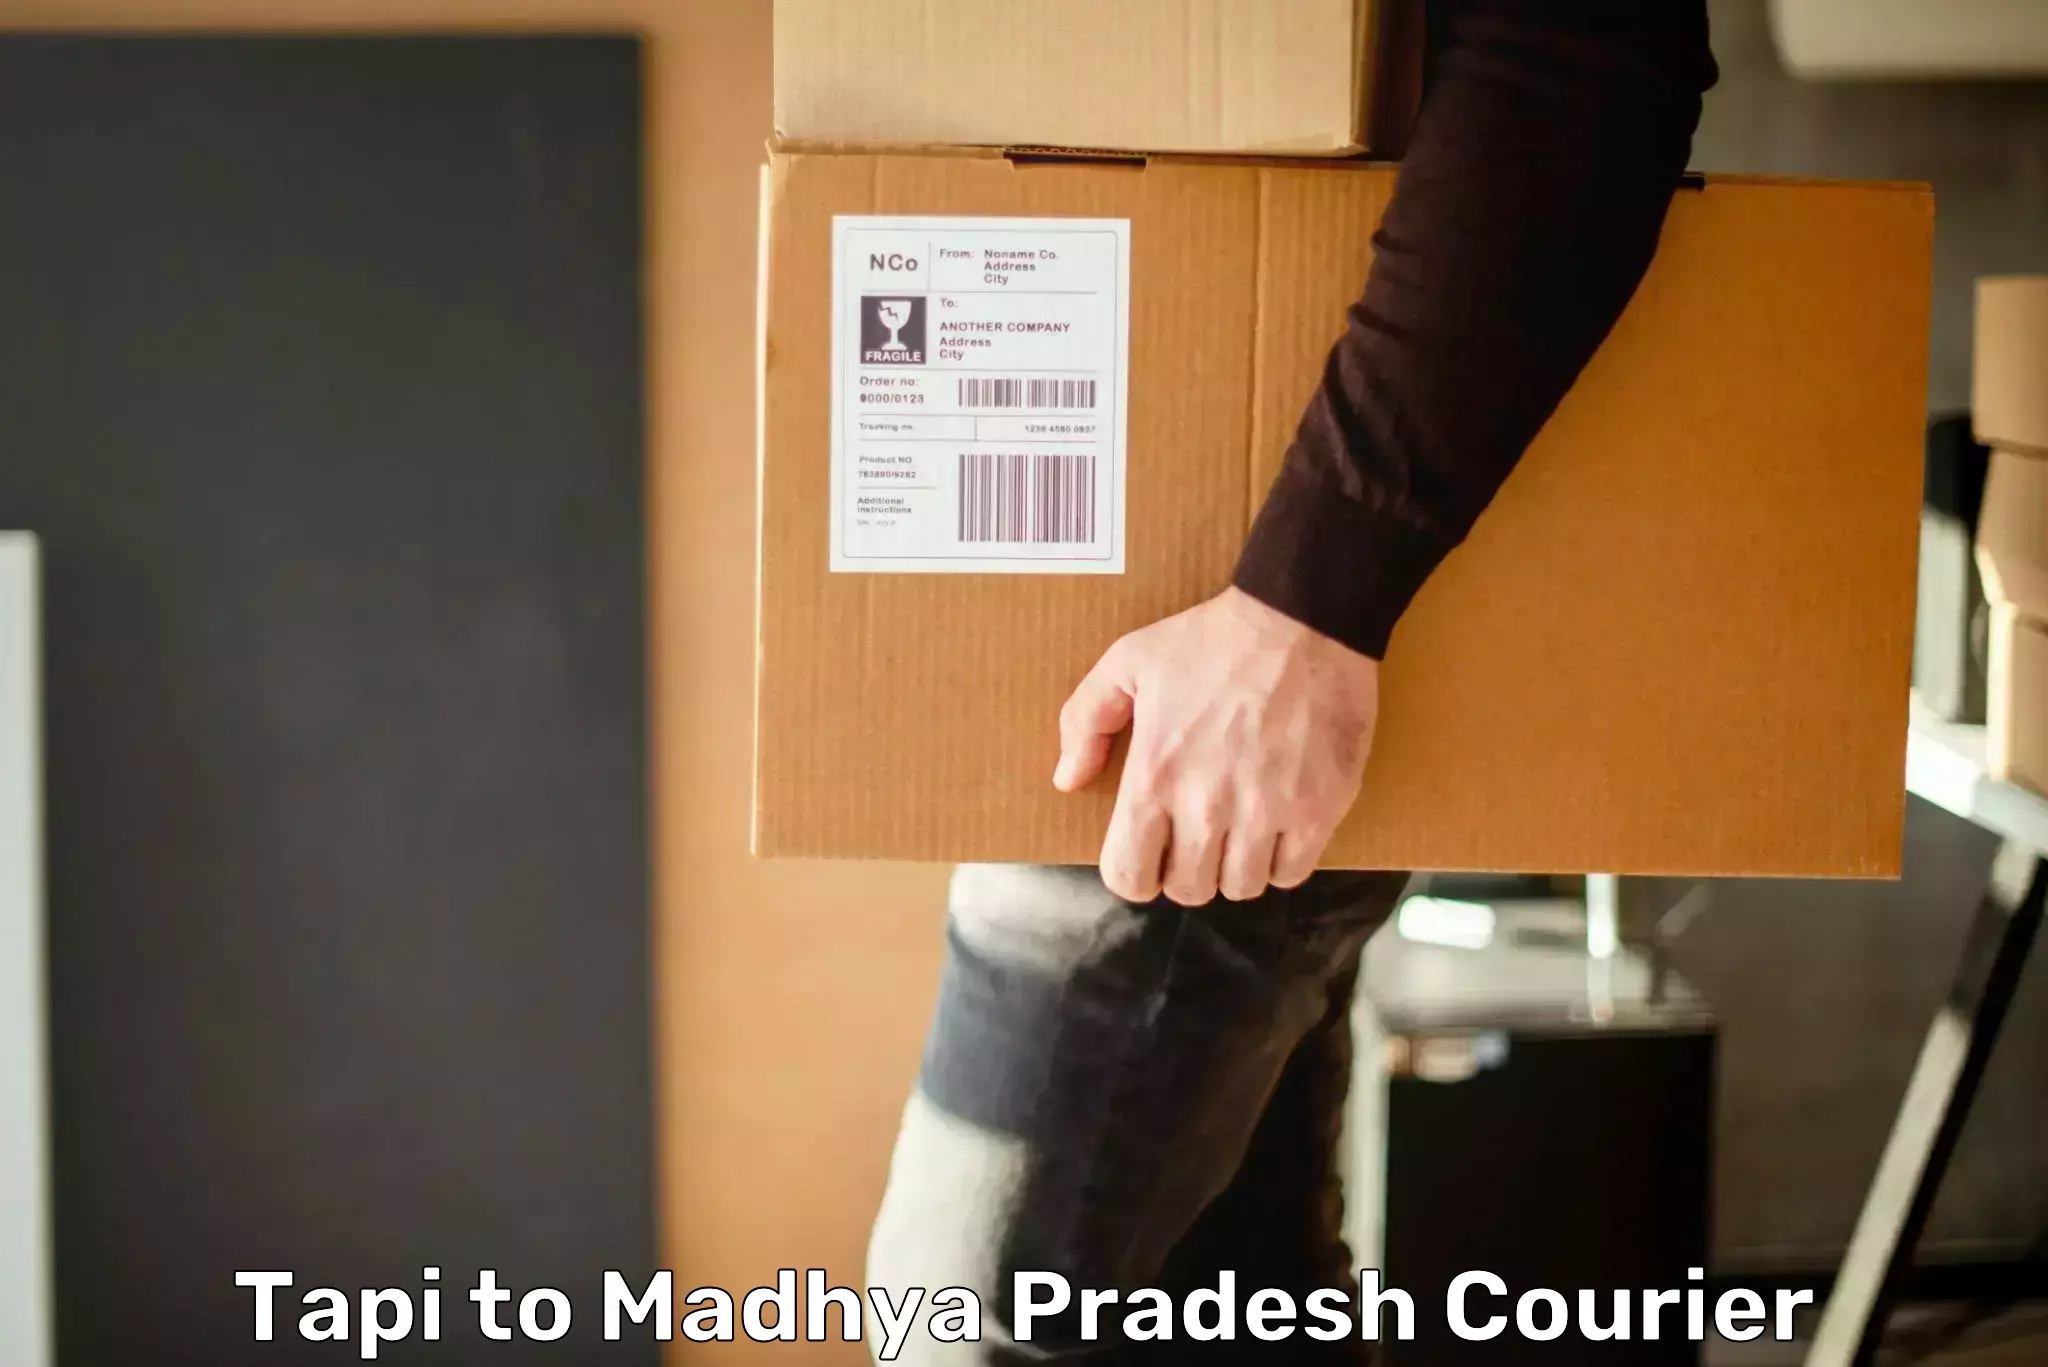 Courier service efficiency Tapi to Madhya Pradesh